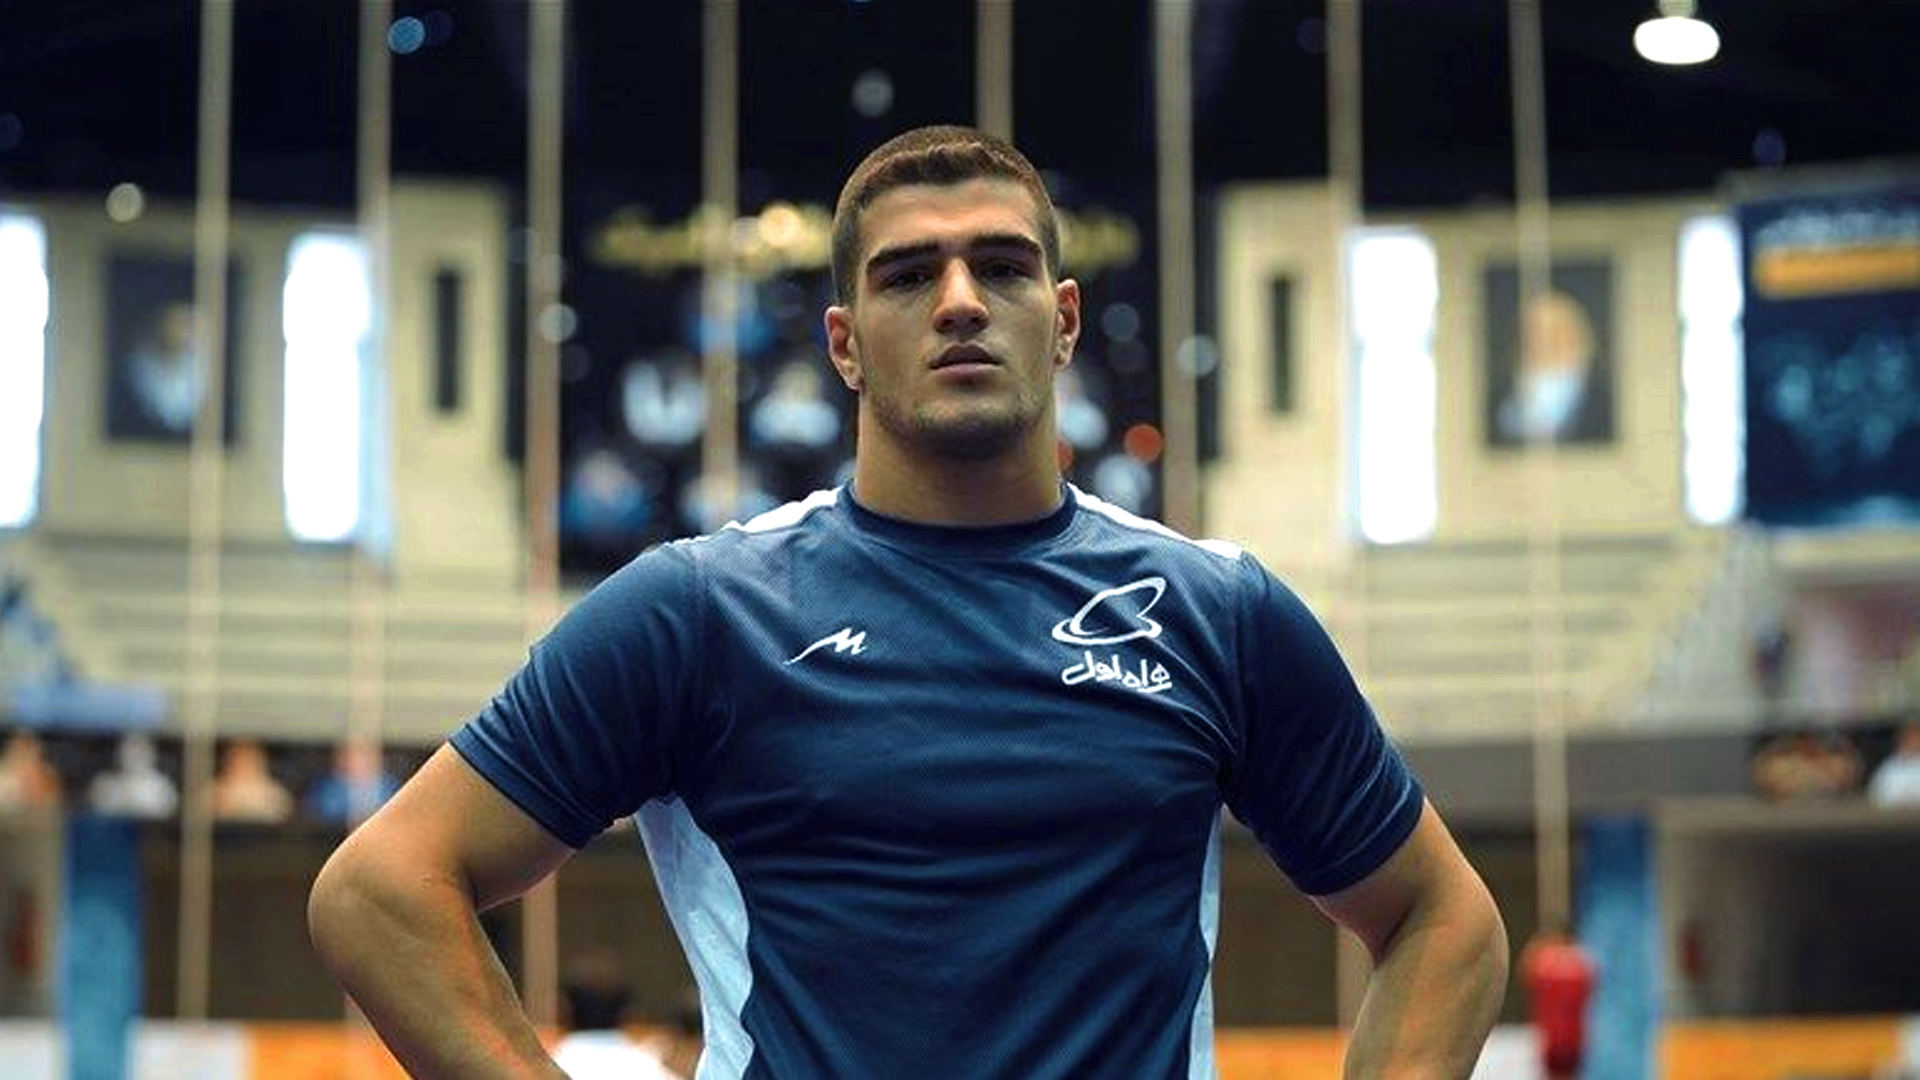 2021 World Cadets C'ships: Iran's freestyle wrestler Masoumi reaches 110 kg final